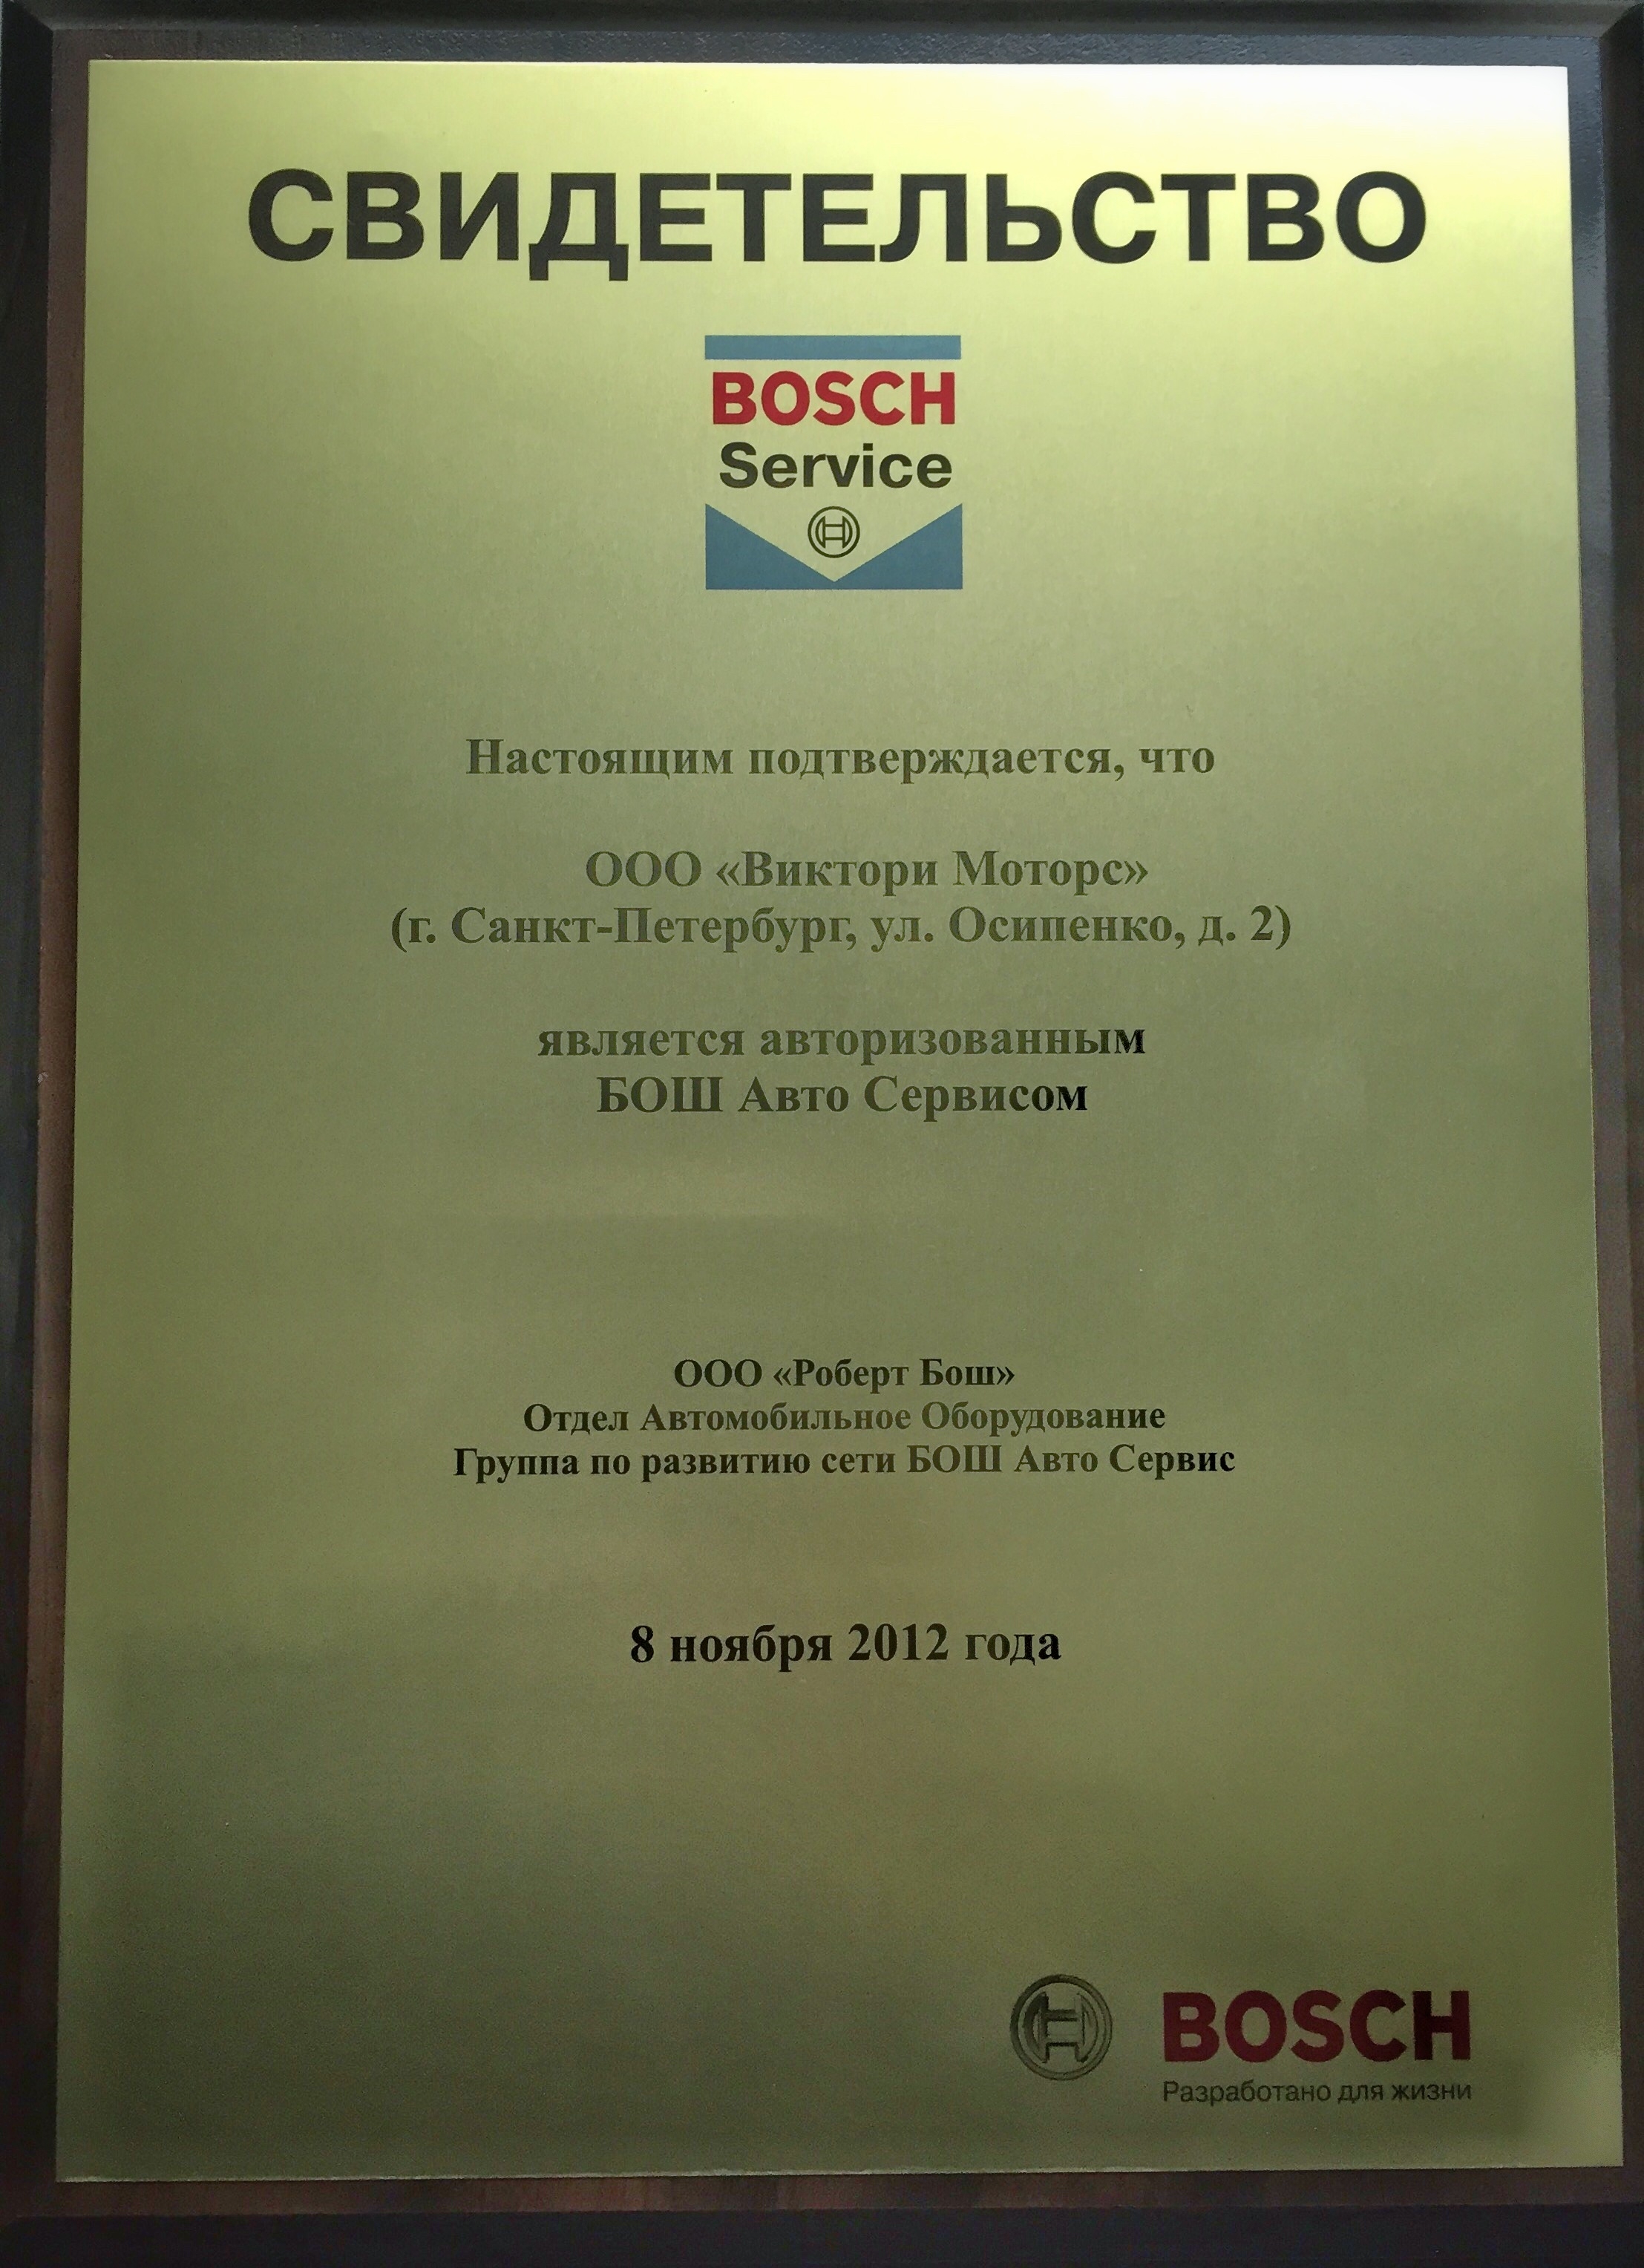 Bosch Service Ефимова, 2